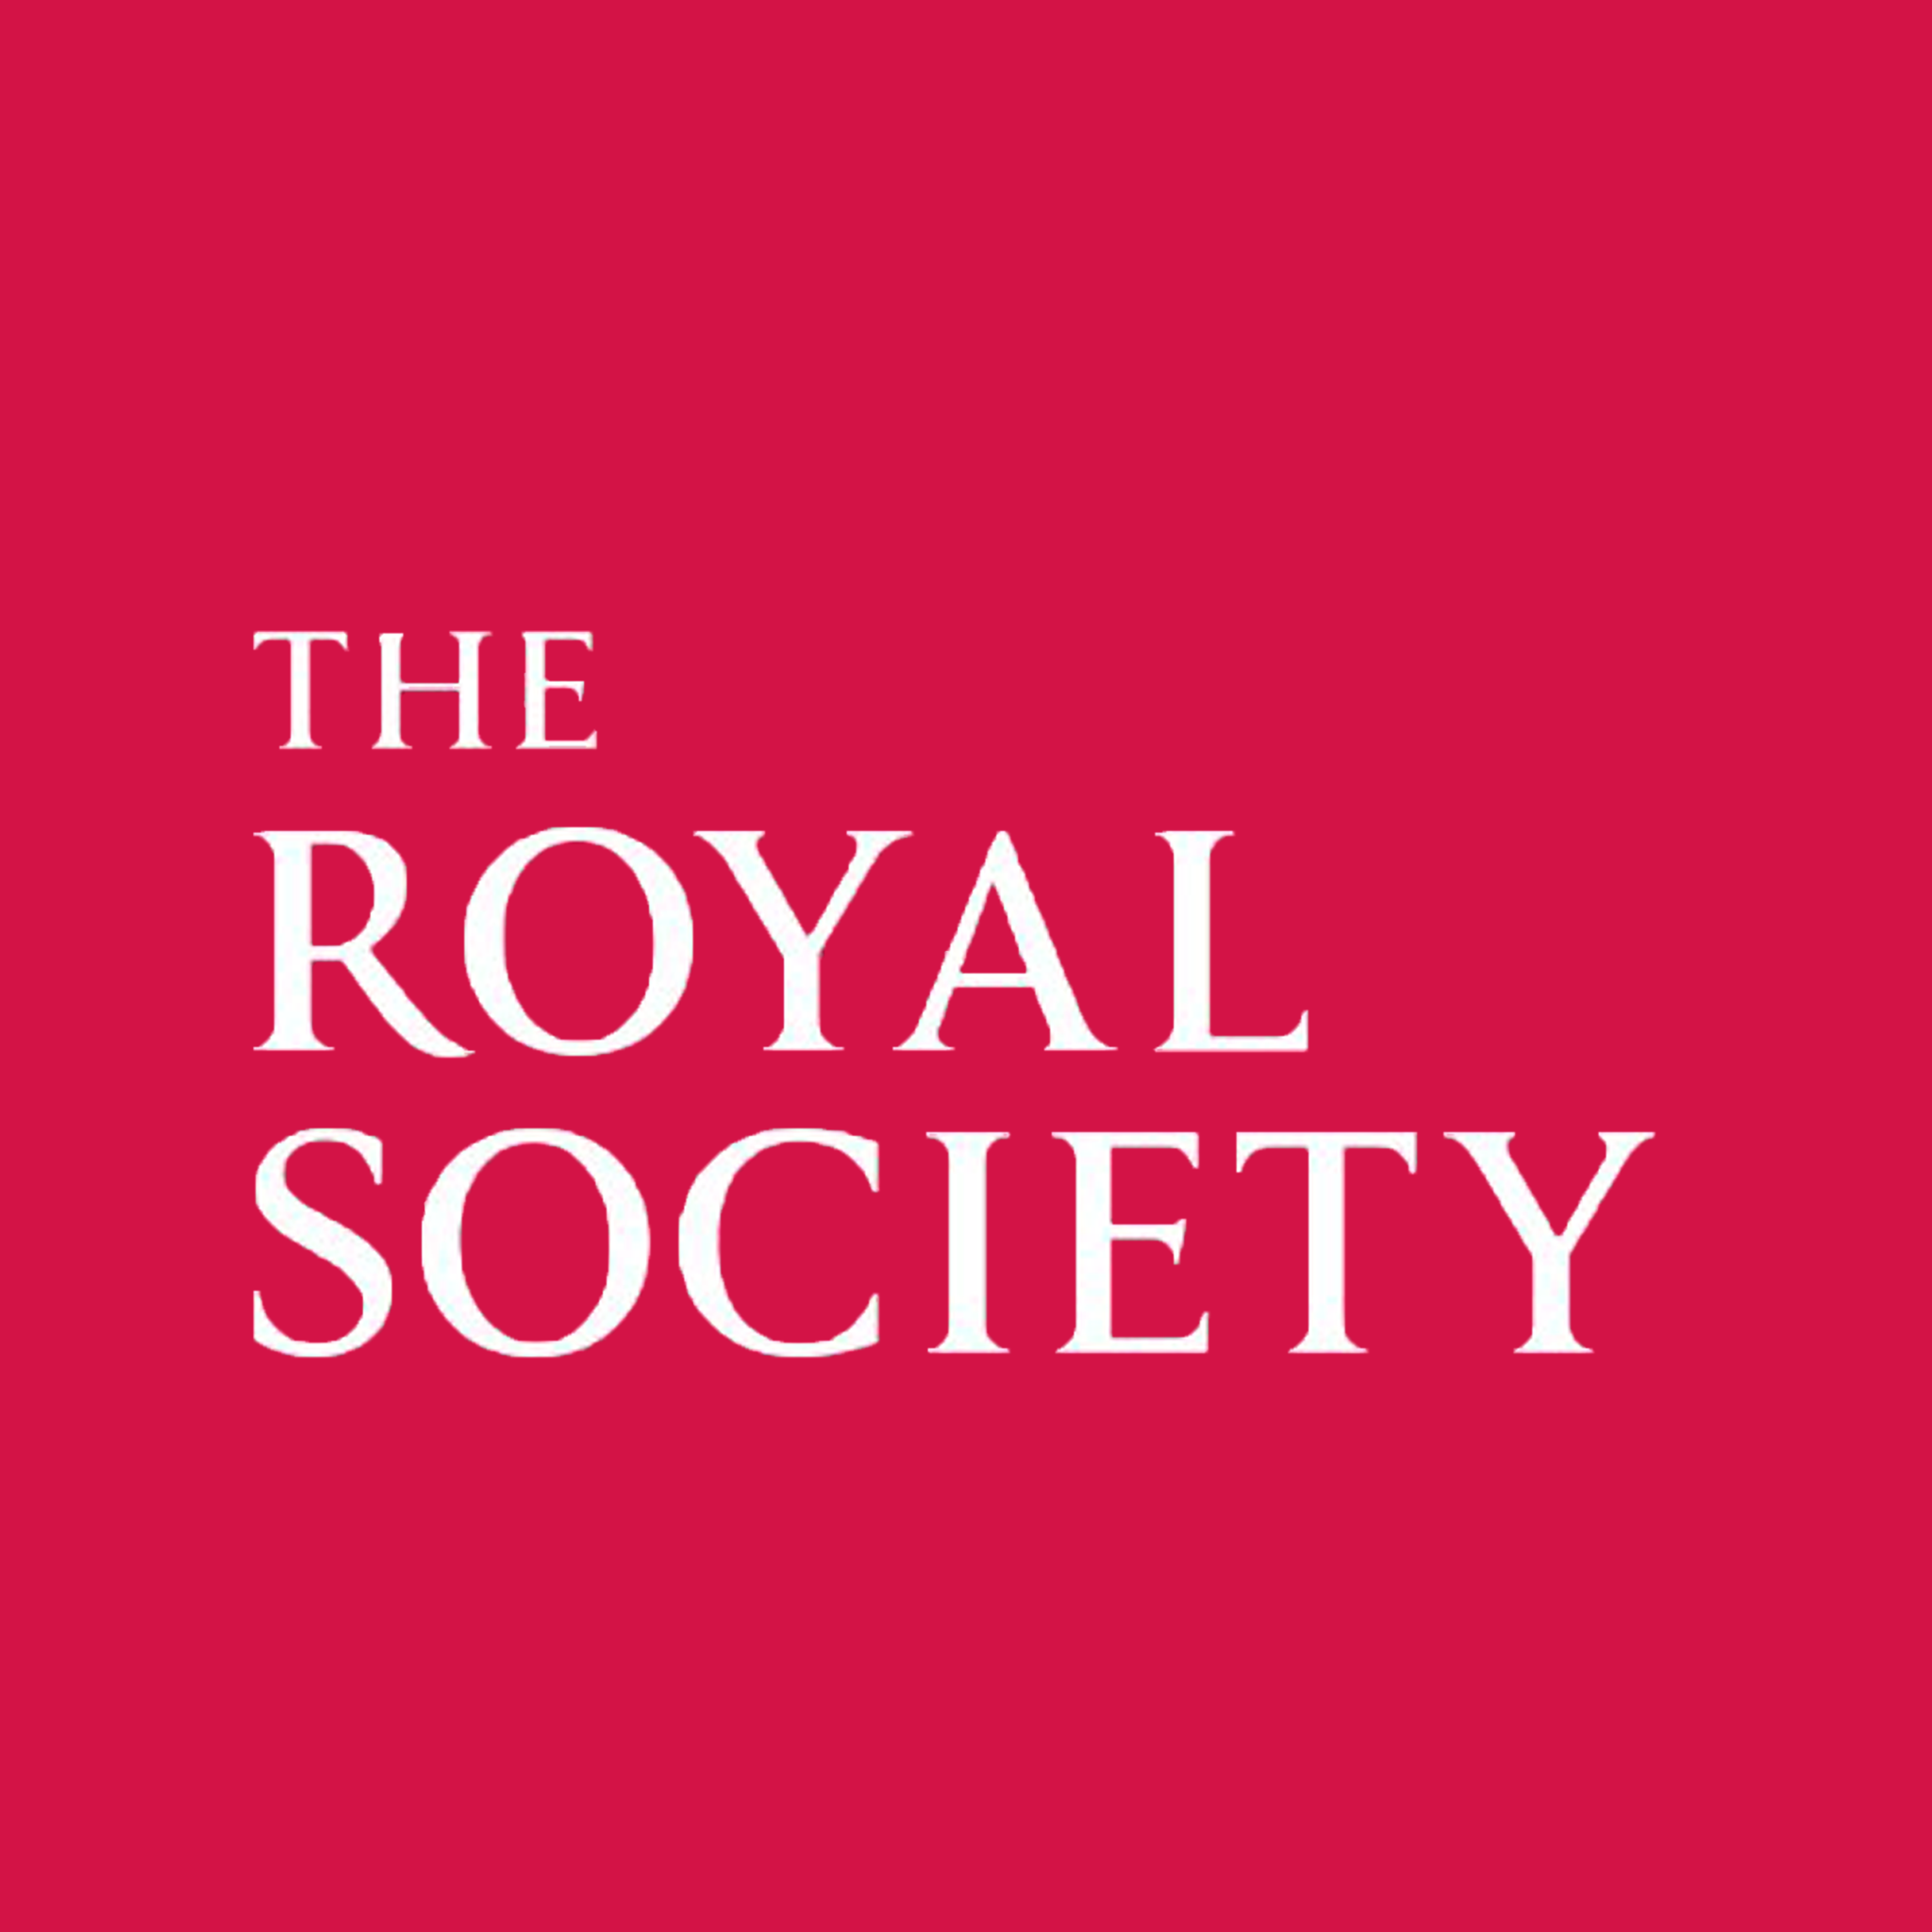 The Royal Society. The Royal Society Publishing. The Royal Society Publishing logo. Лондонское Королевское общество. Royal society